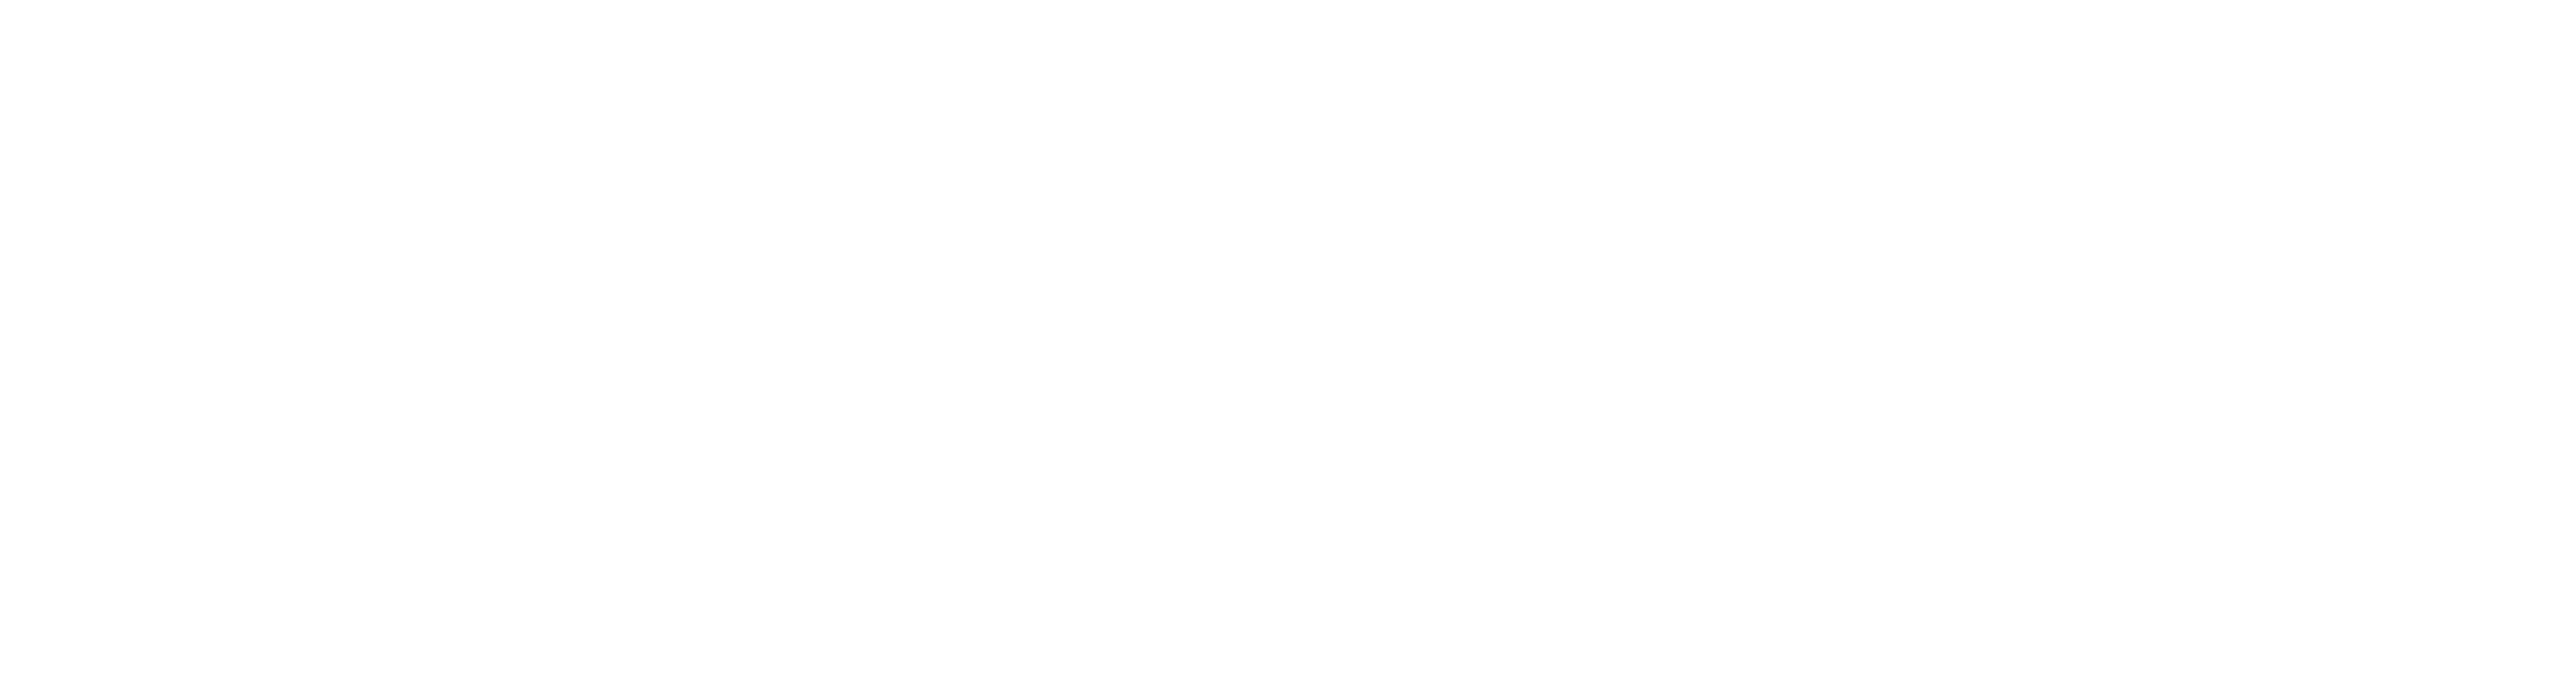 Mindspace Foundation